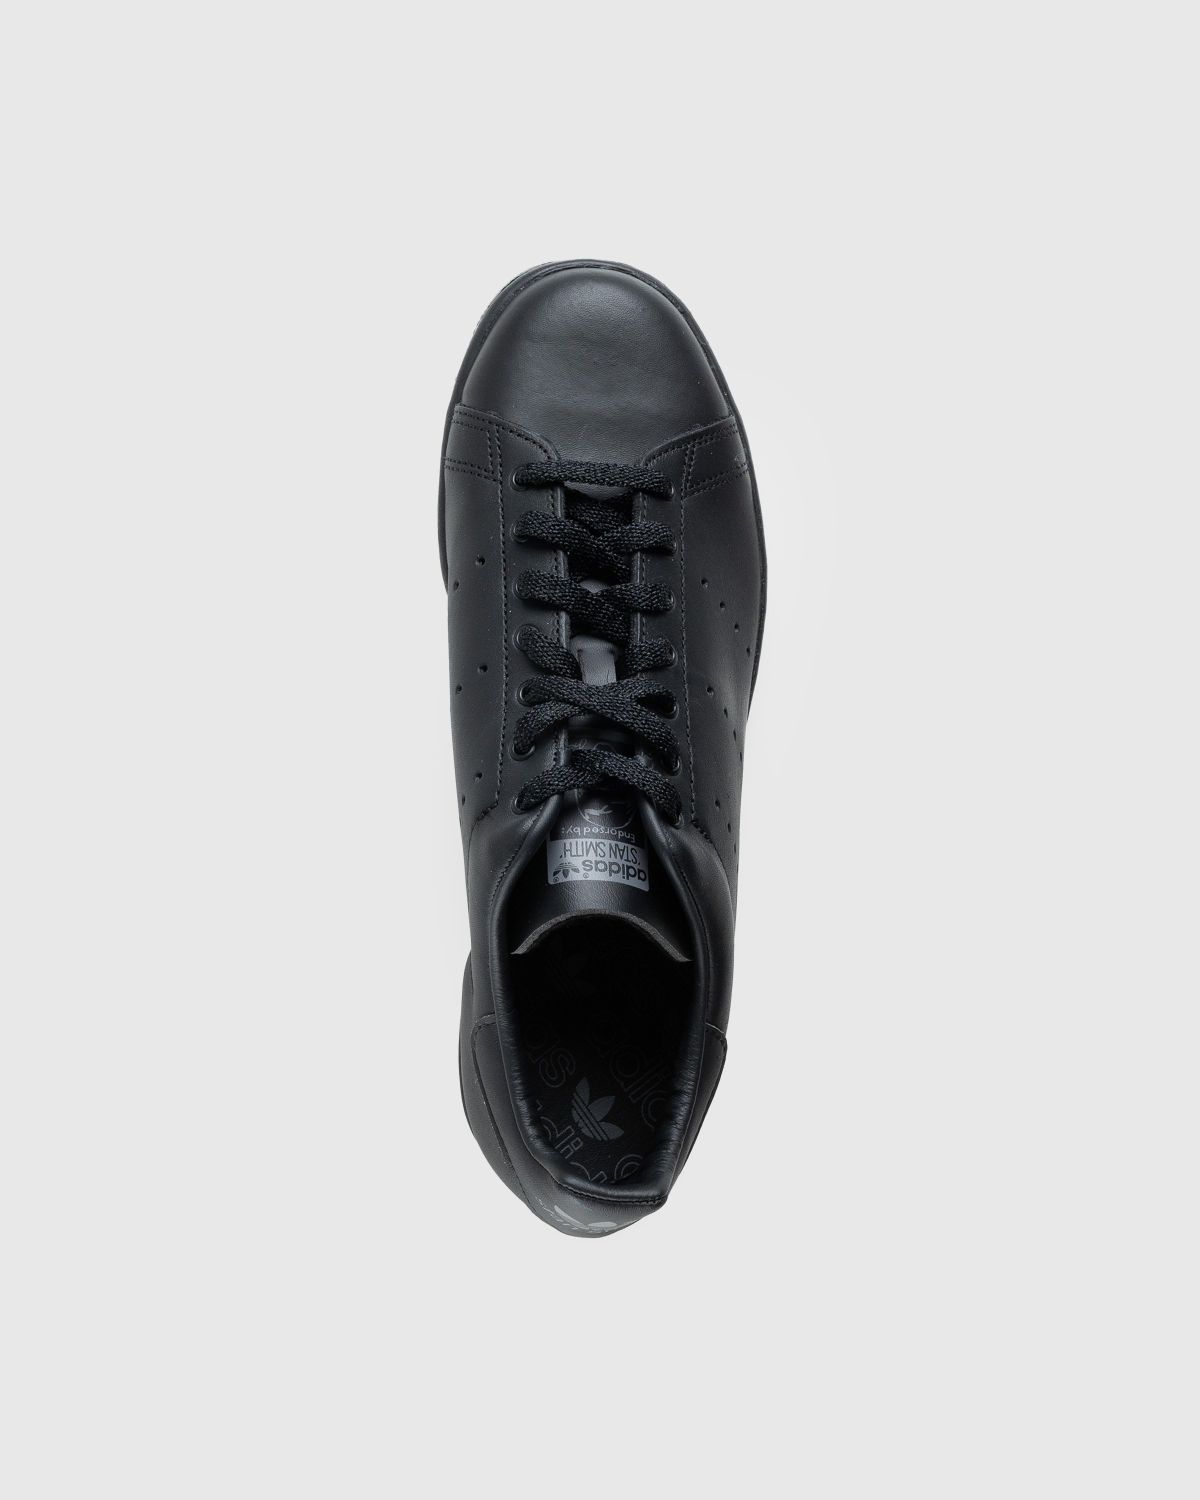 Adidas – Stan Smith 80s Black - Low Top Sneakers - Black - Image 5